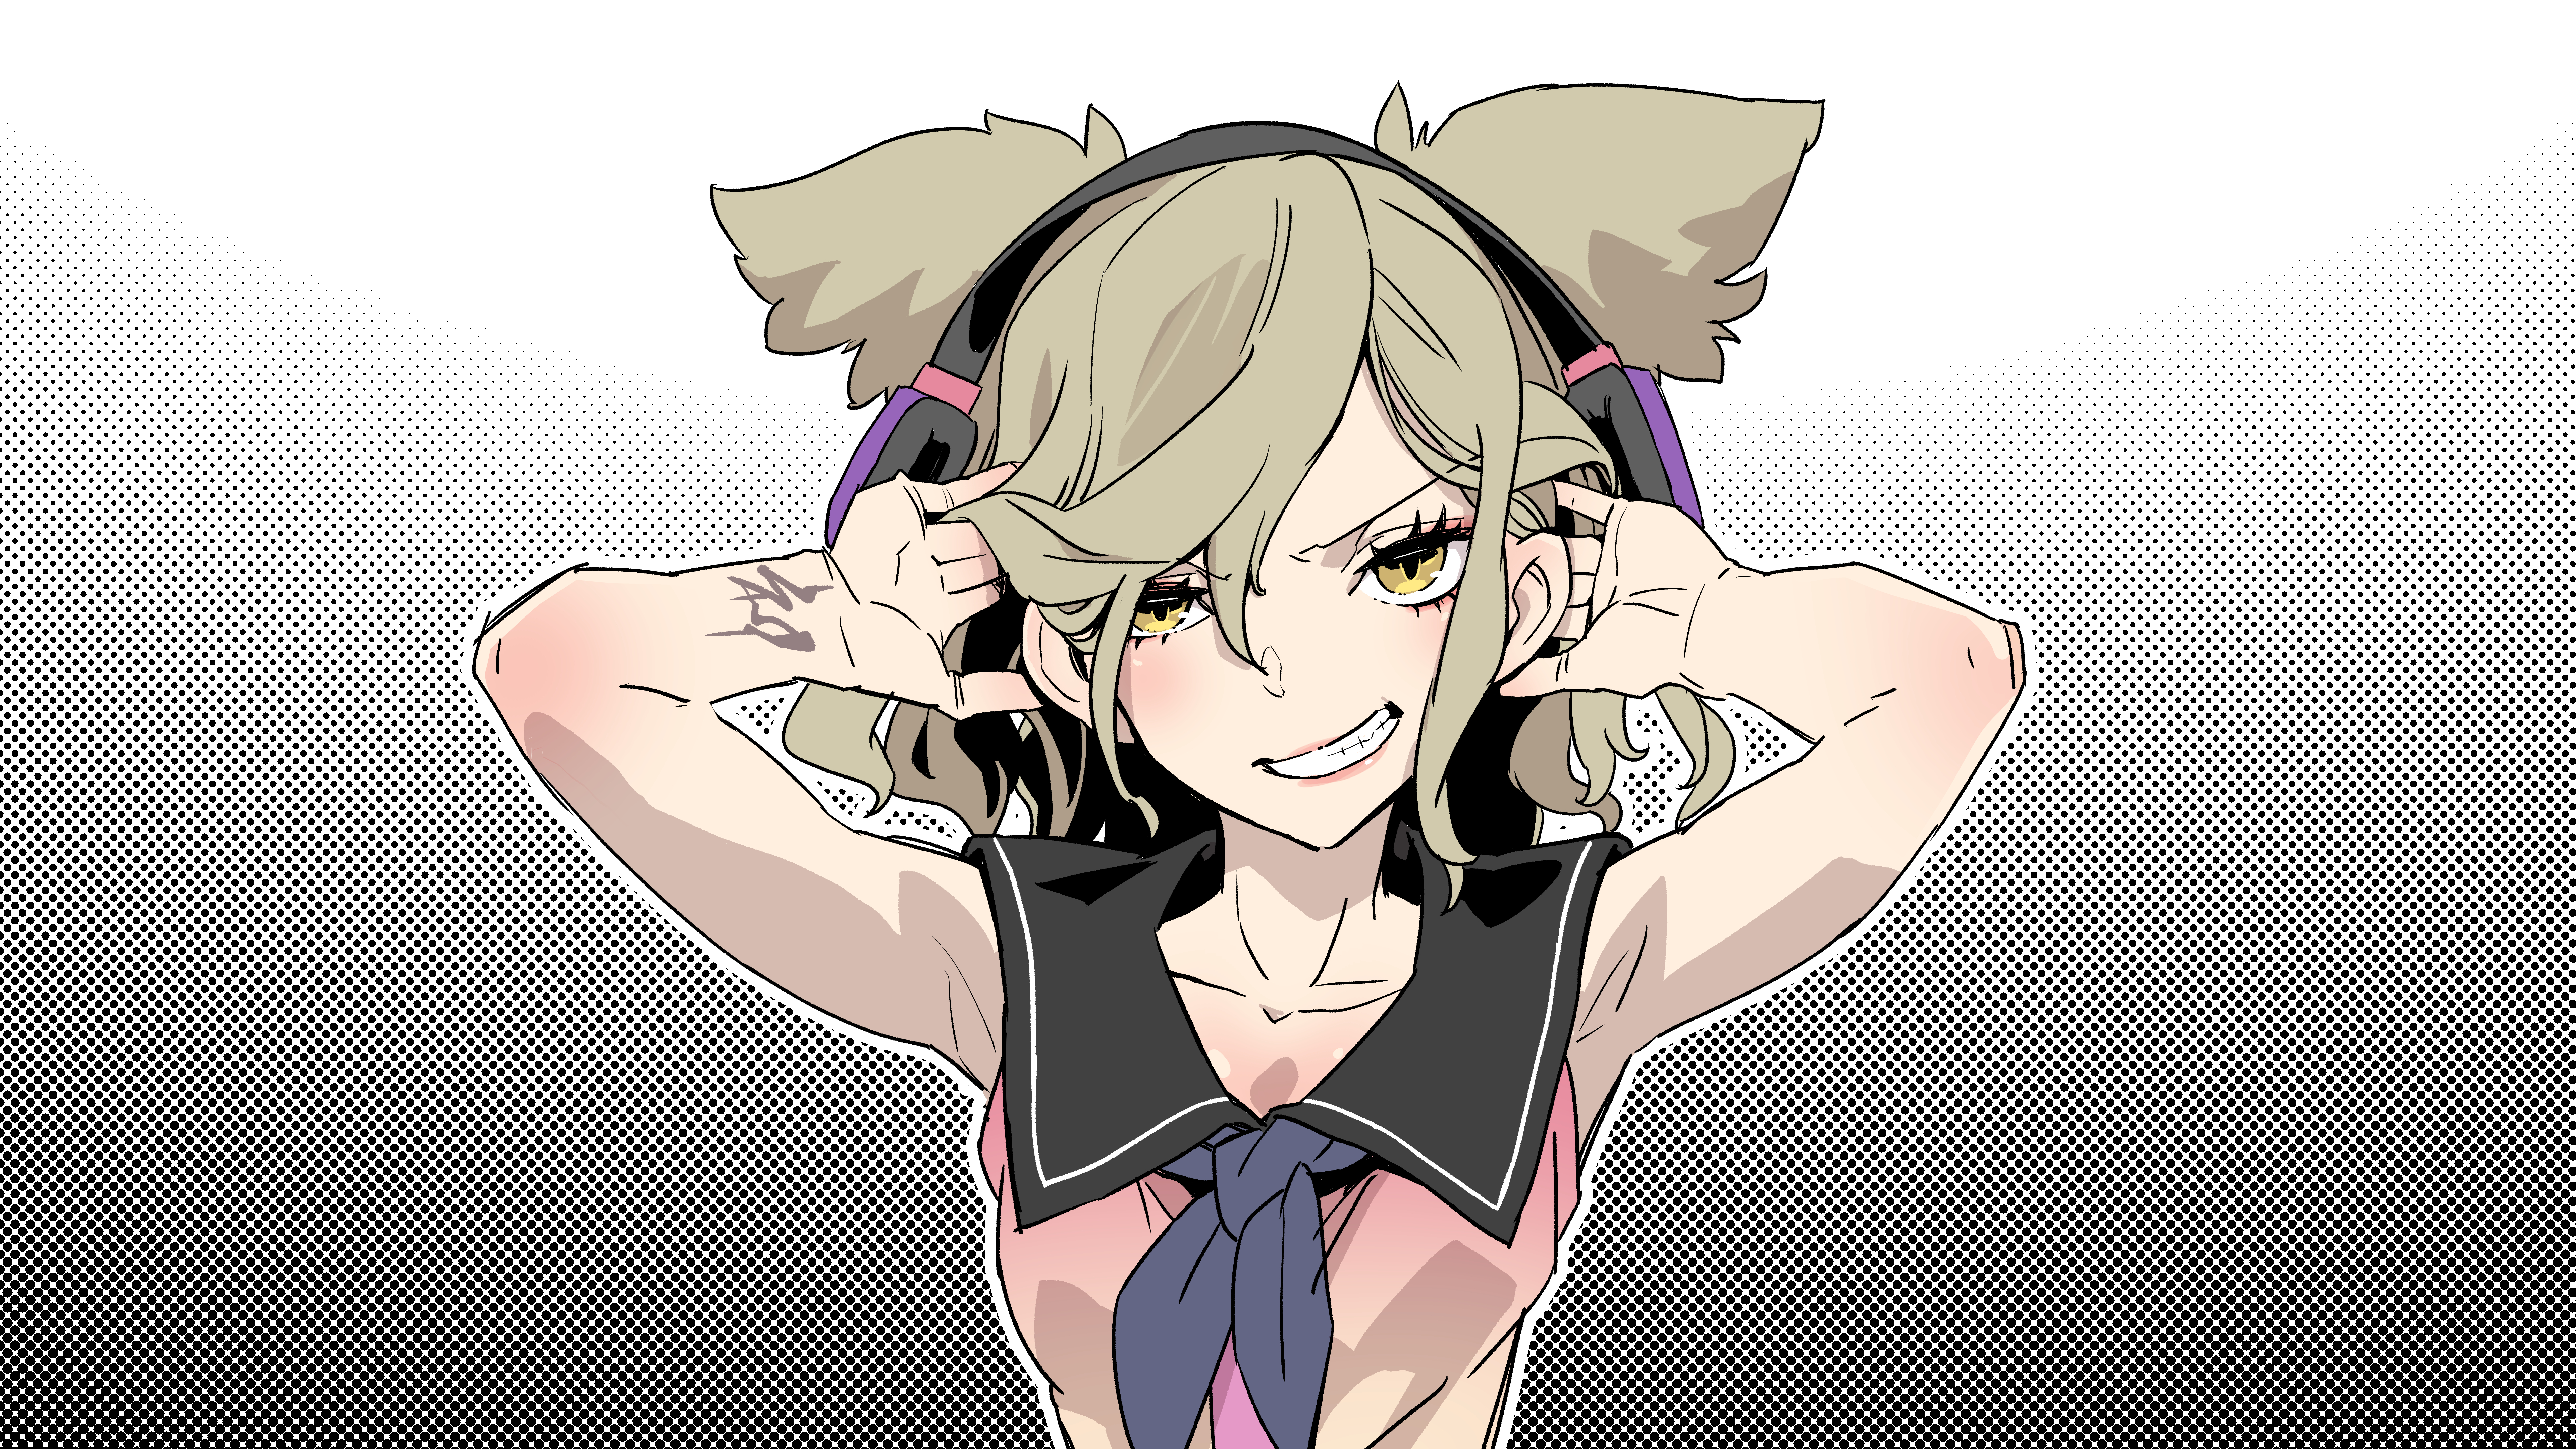 Anime 7680x4320 Touhou Toyosatomimi no Miko armpits headsets headphones smiling kawayabug anime